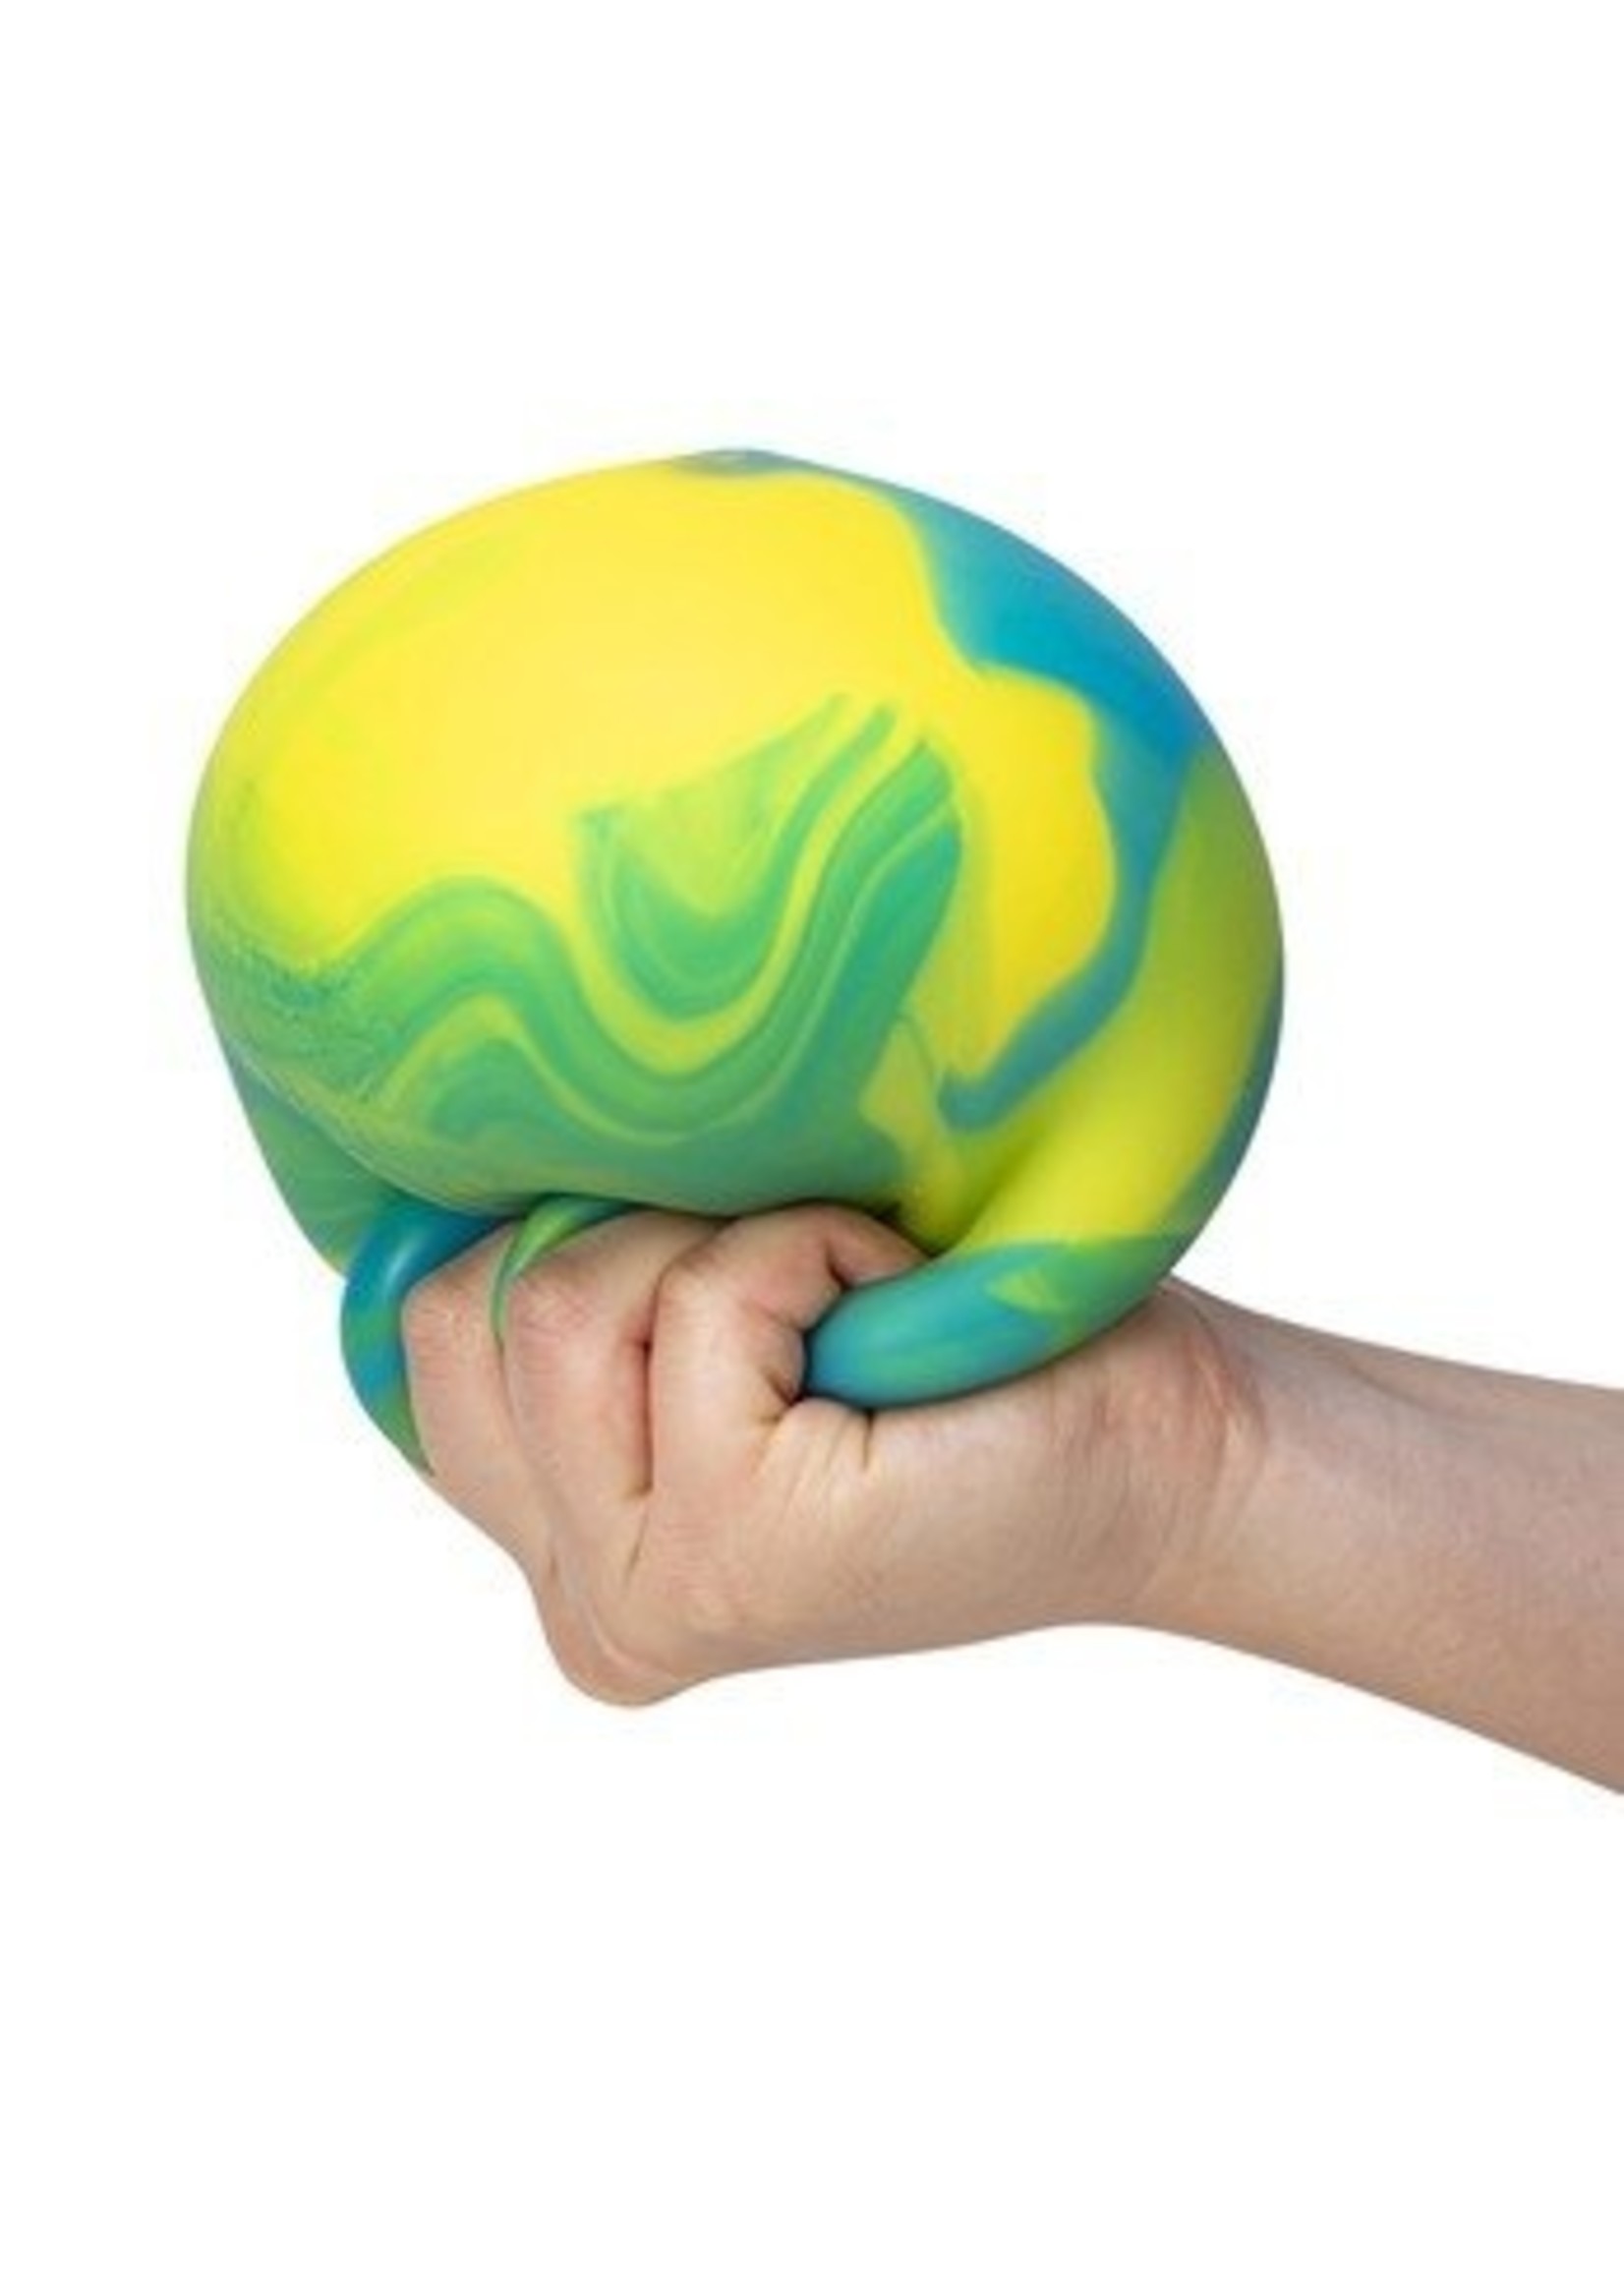 Schylling Nee Doh Stress Ball Colors Shipped Randomly Stress Ball